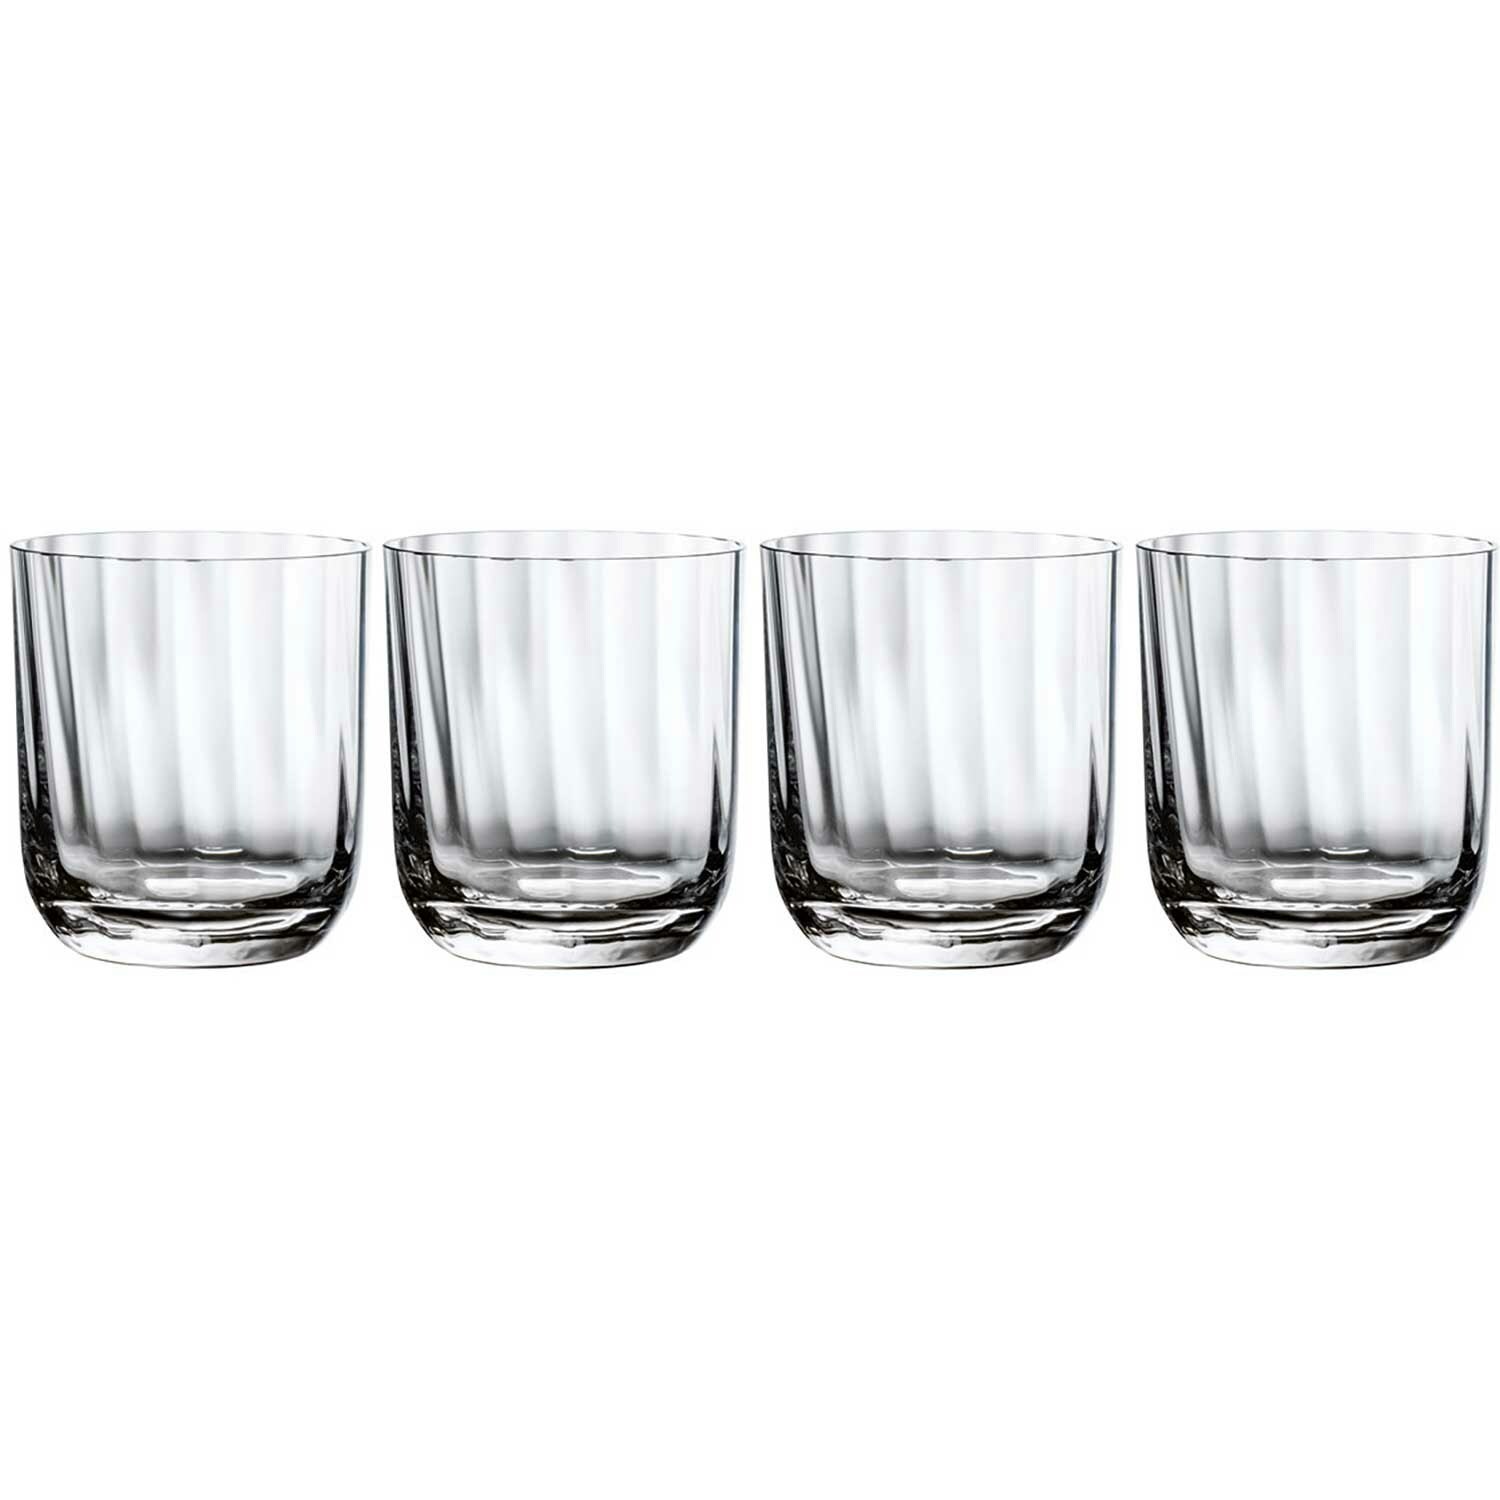 Glass Family Water Glas 320 ml - Alessi @ RoyalDesign